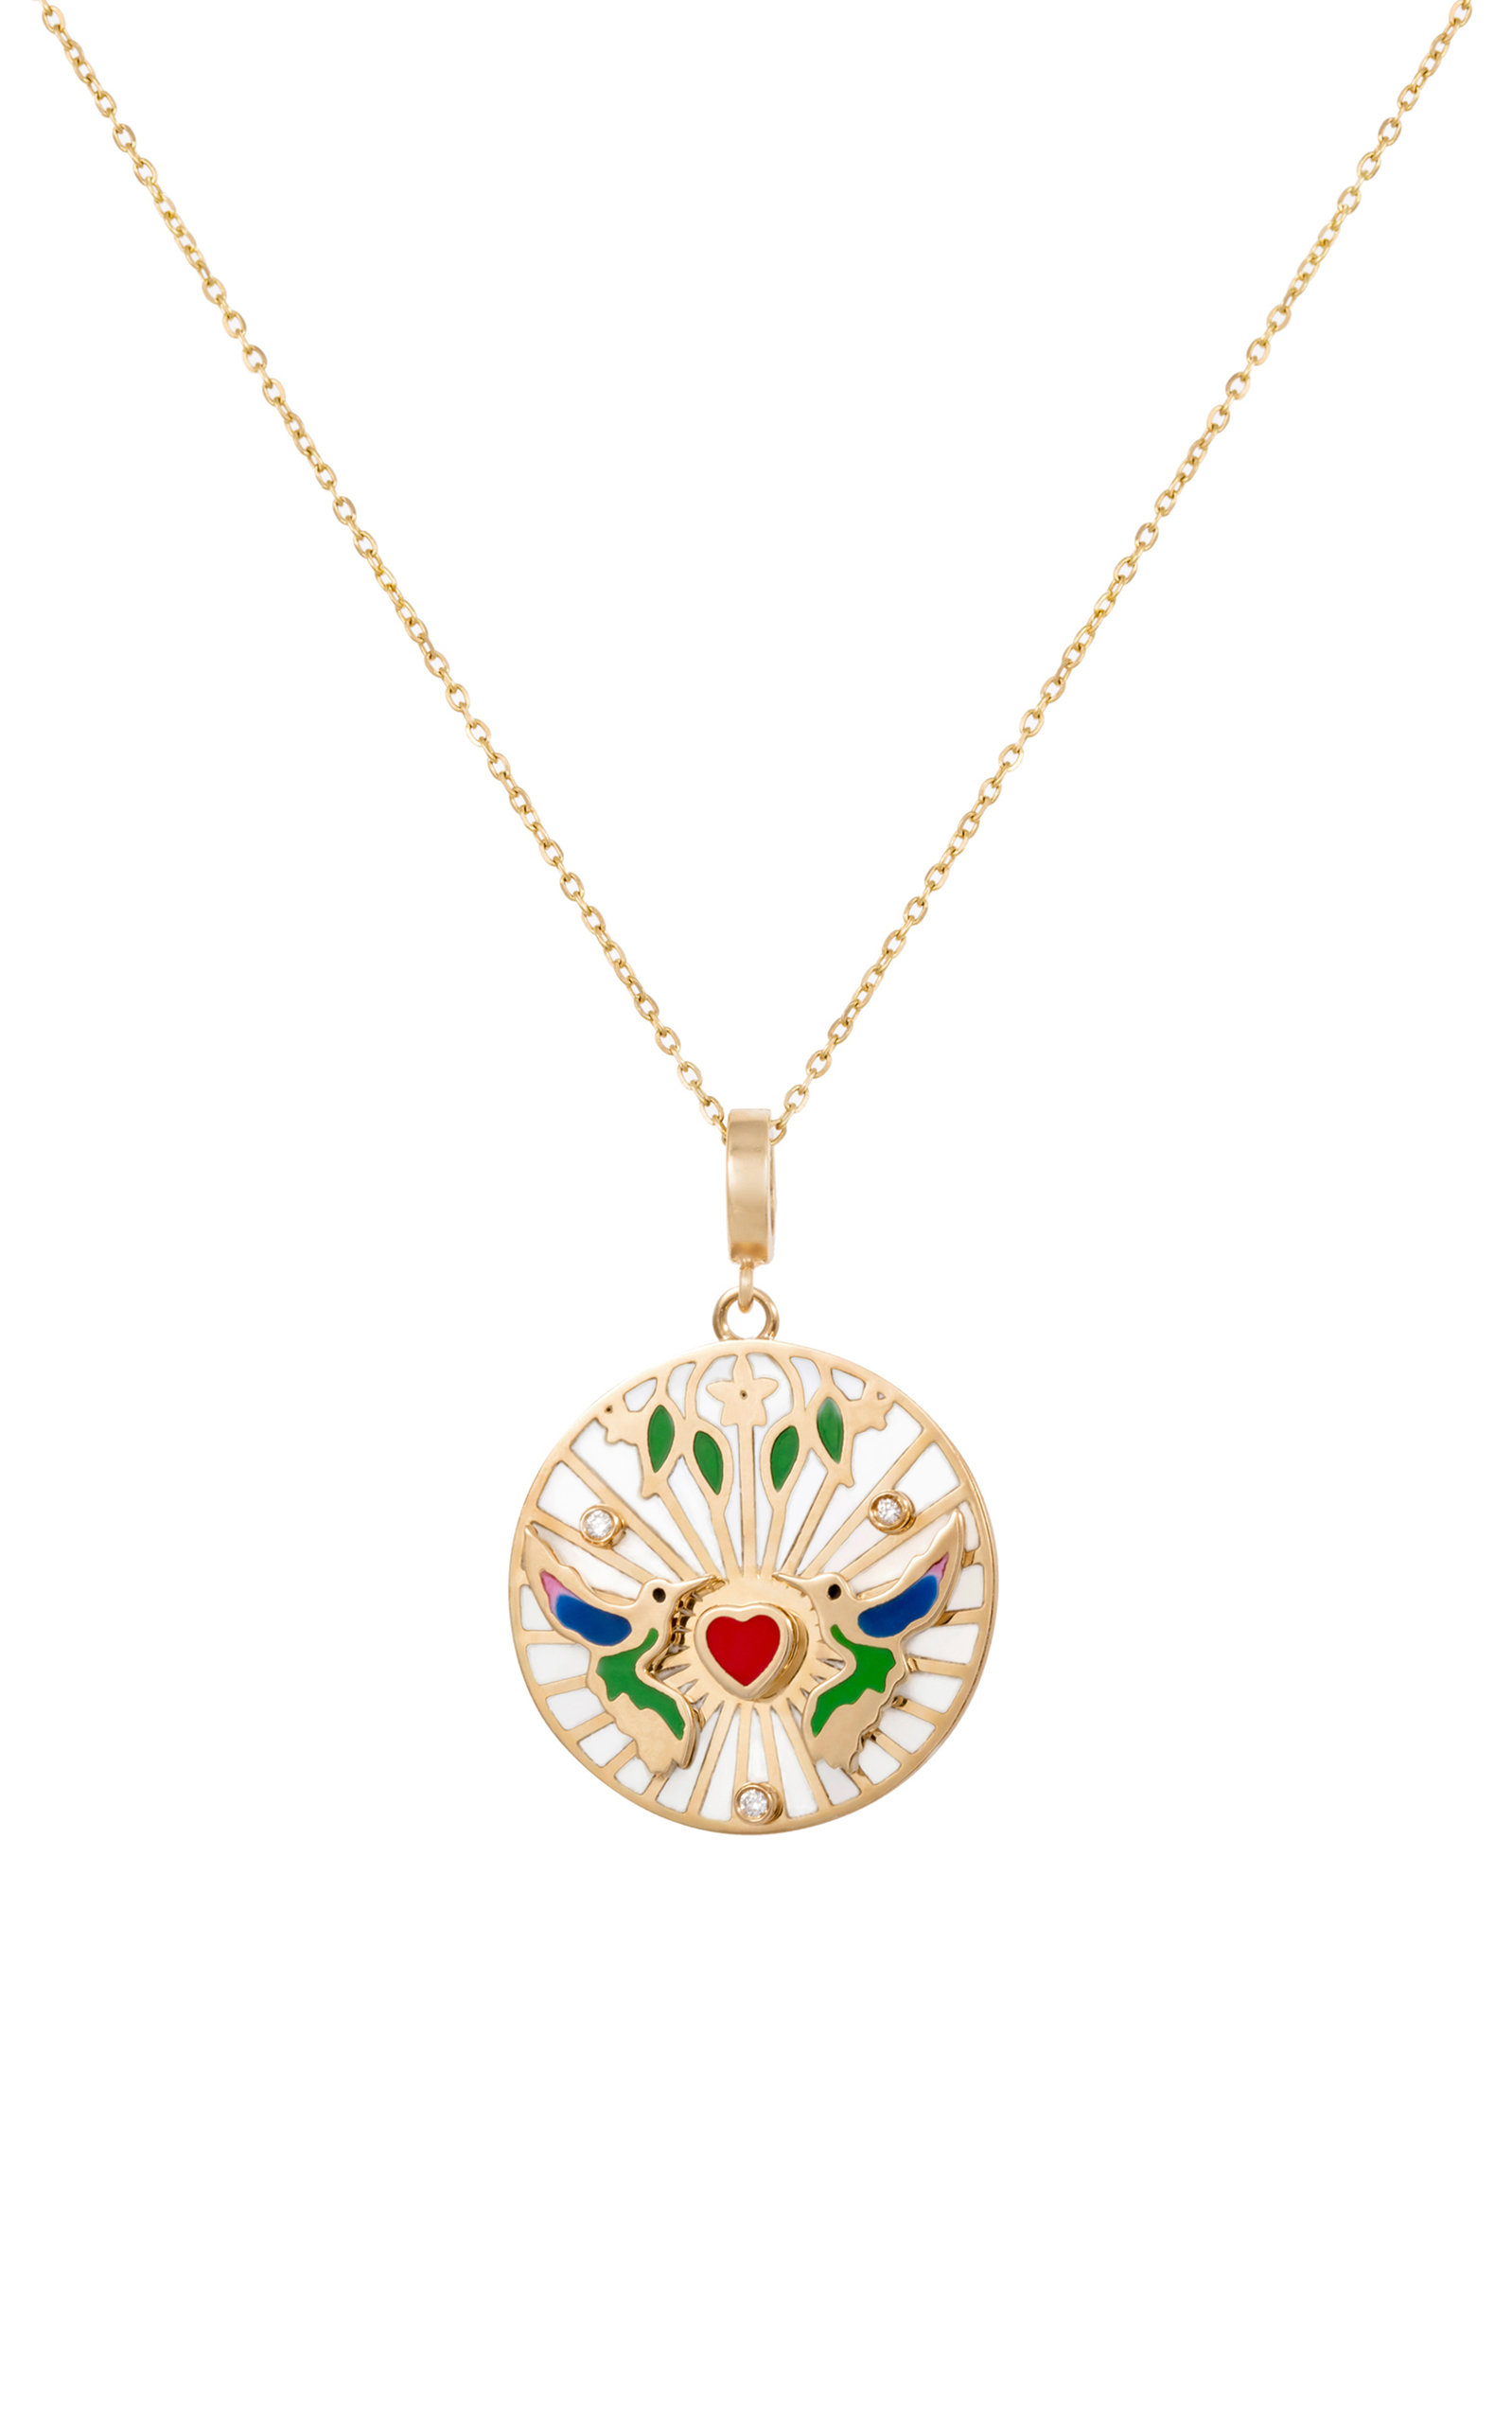 L'Atelier Nawbar Women's The Love Bird 18K Yellow Gold Pendant Necklace